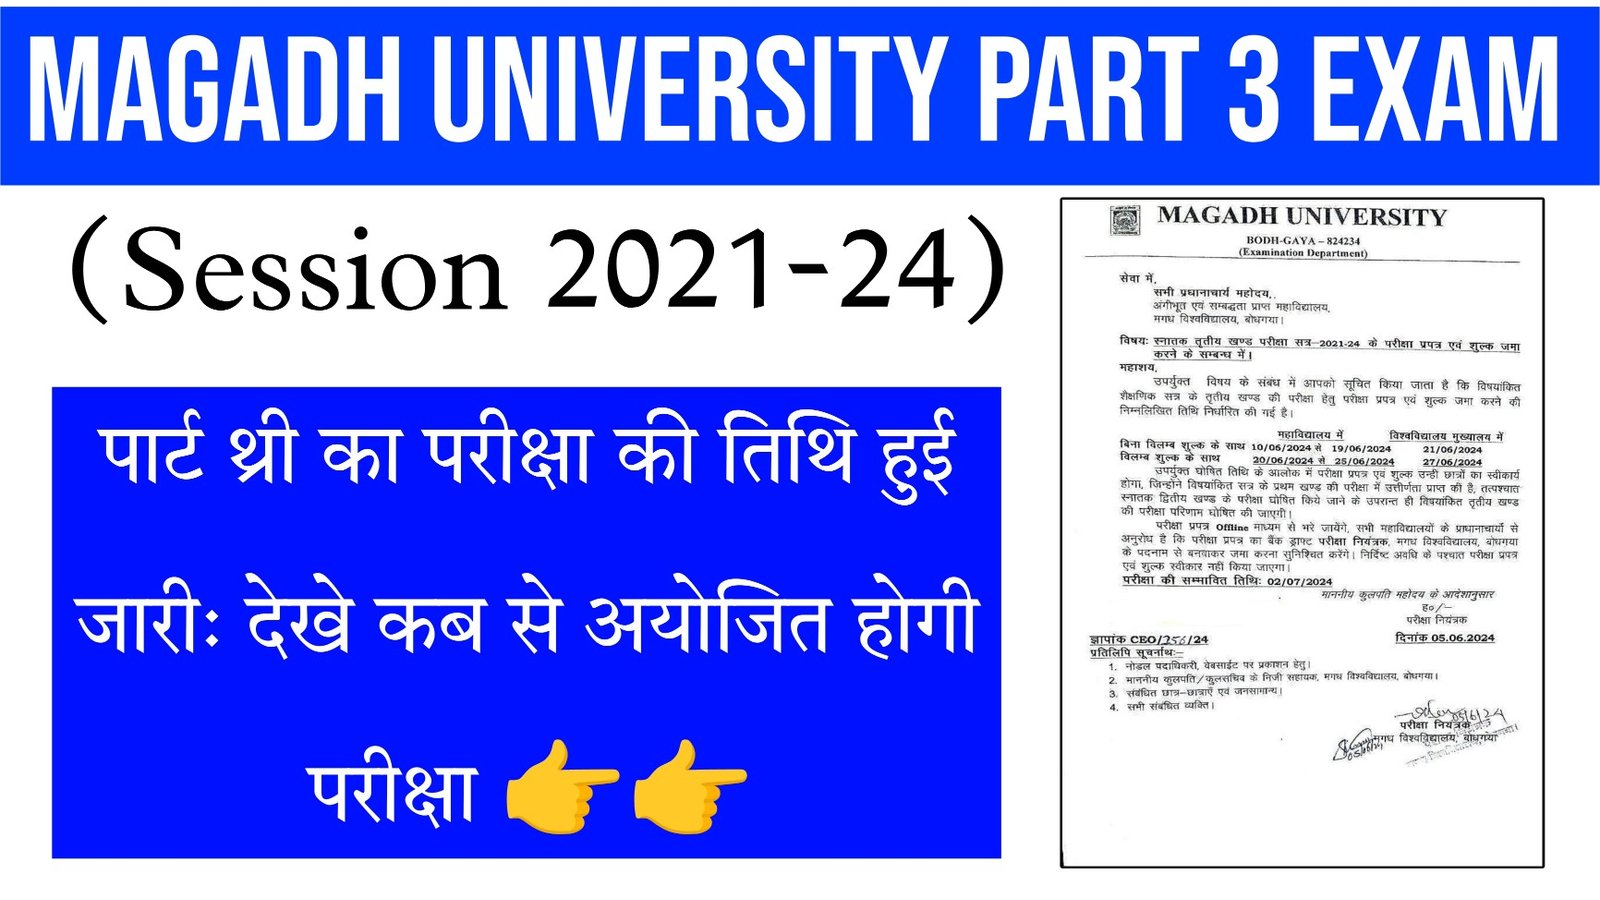 Magadh University Part 3 Exam Date 2021-24